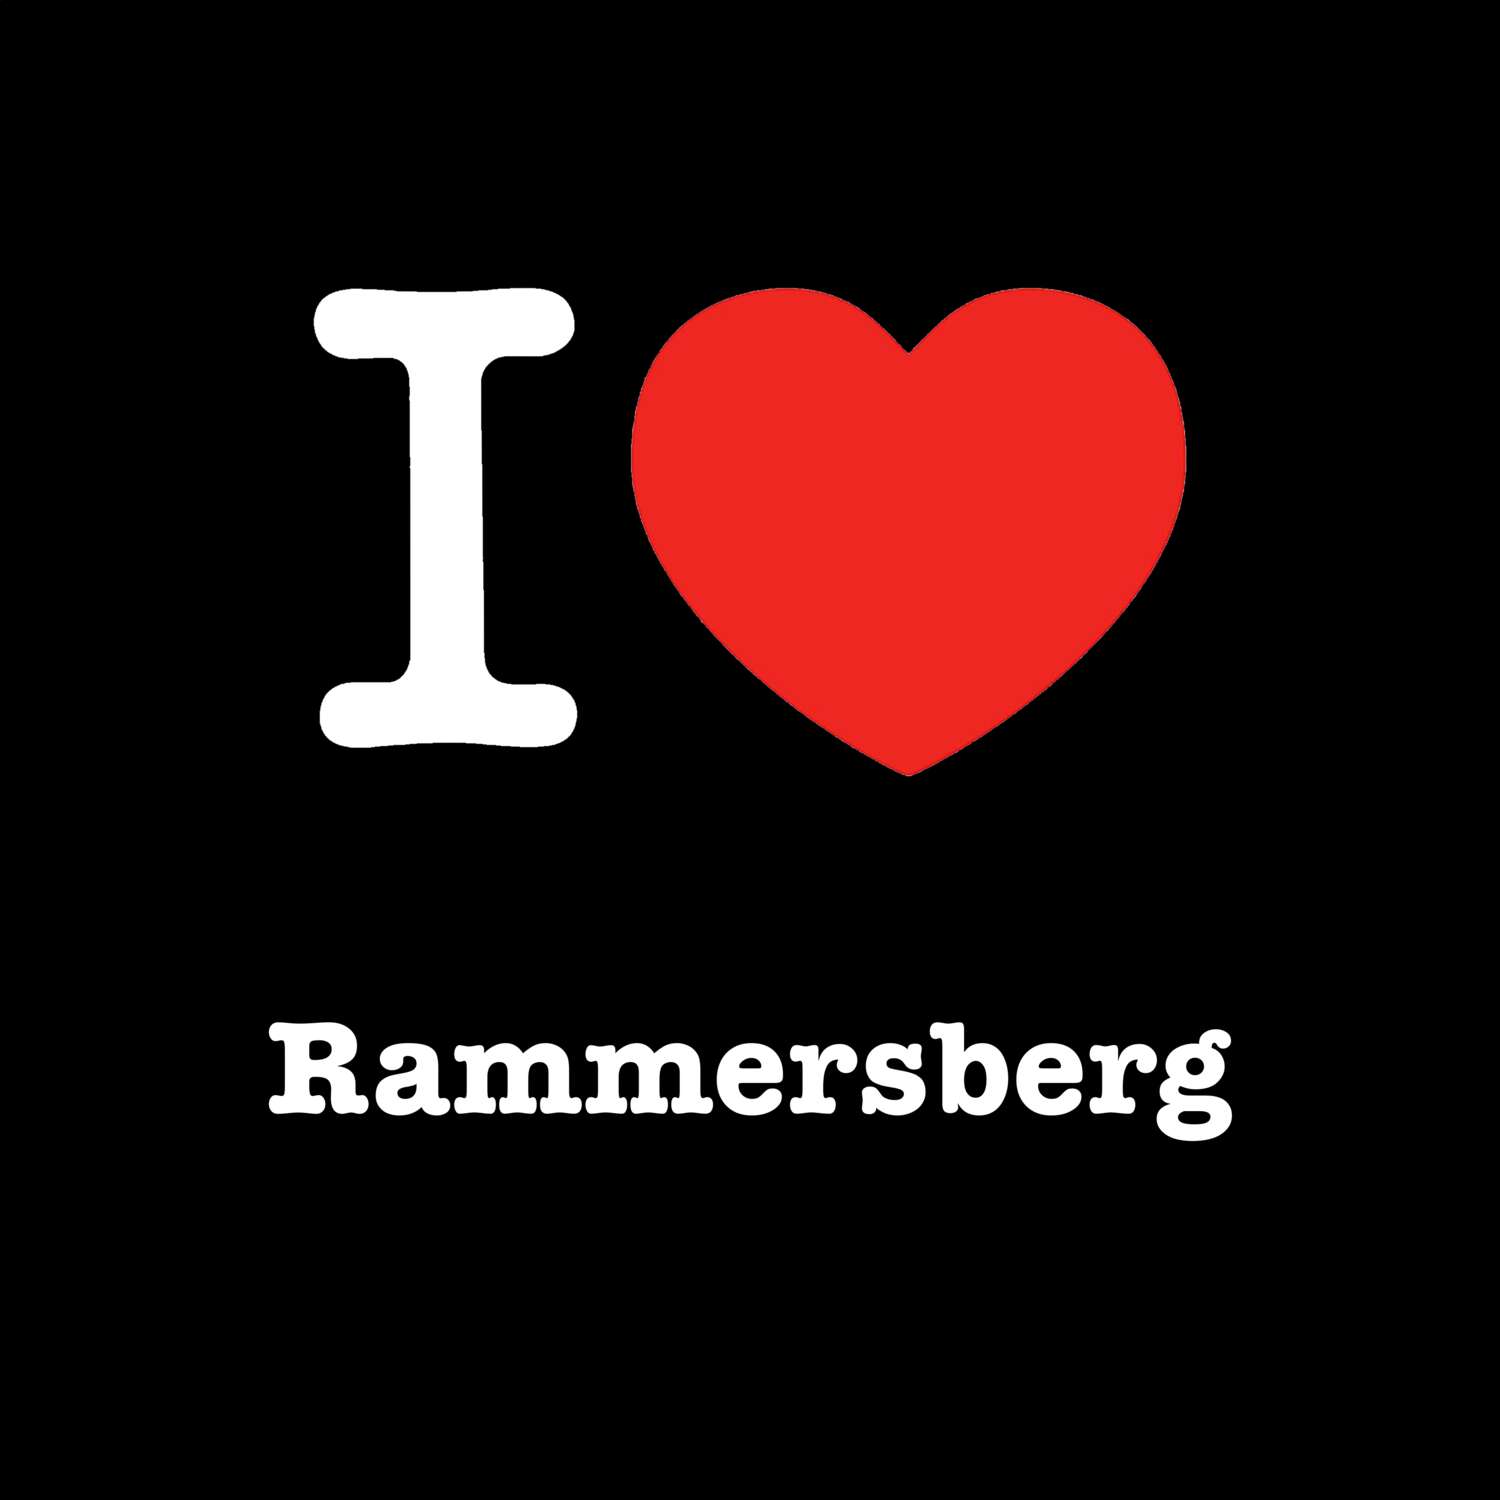 Rammersberg T-Shirt »I love«